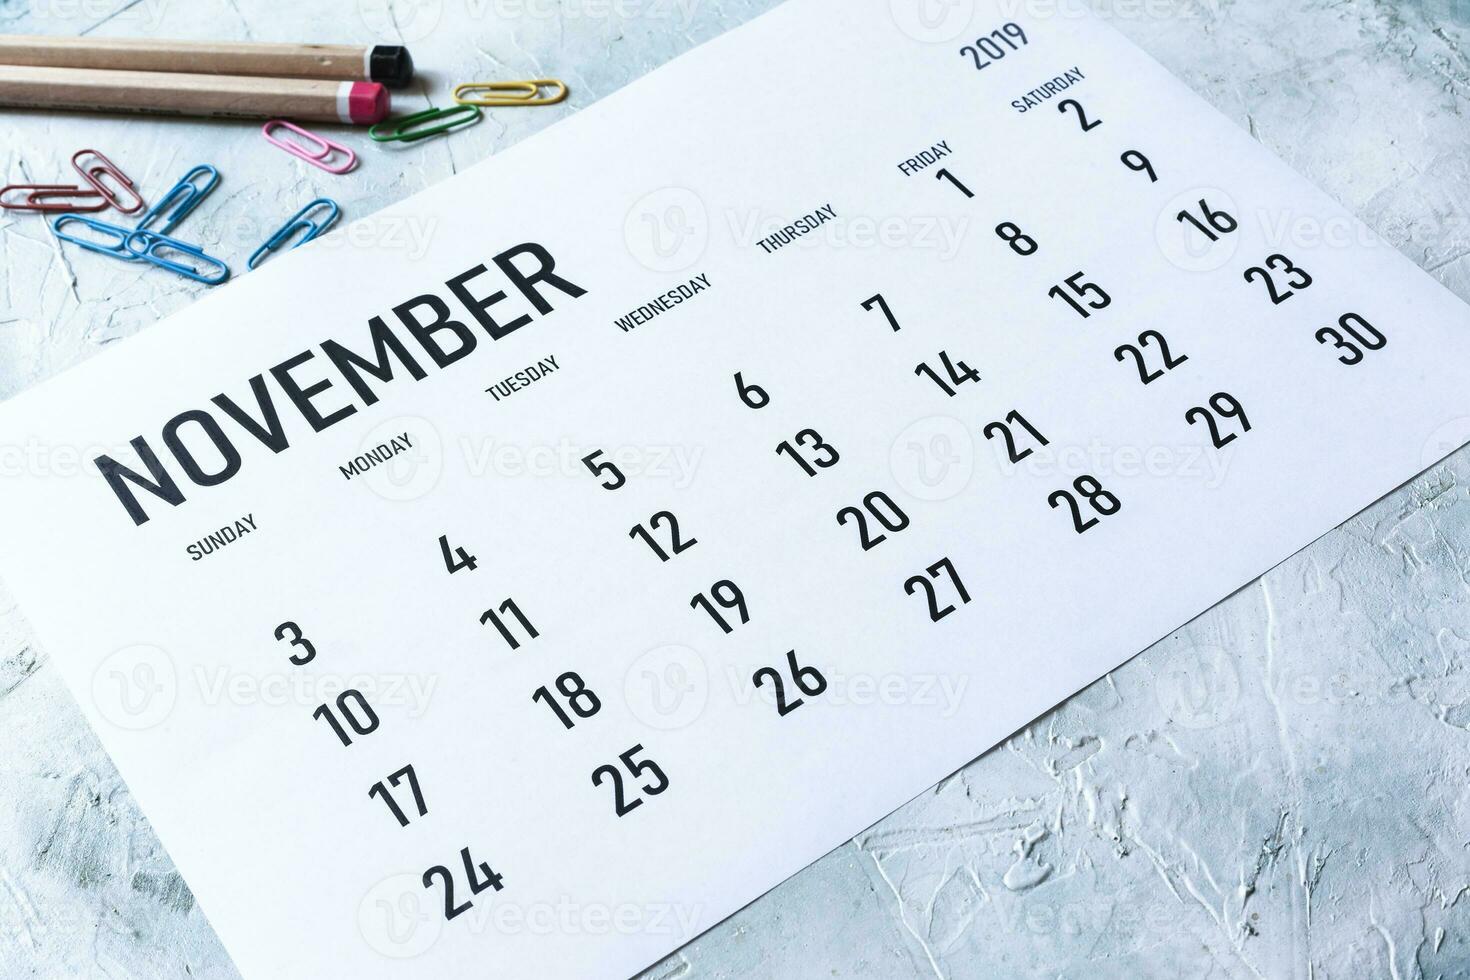 mensile novembre 2019 calendario foto